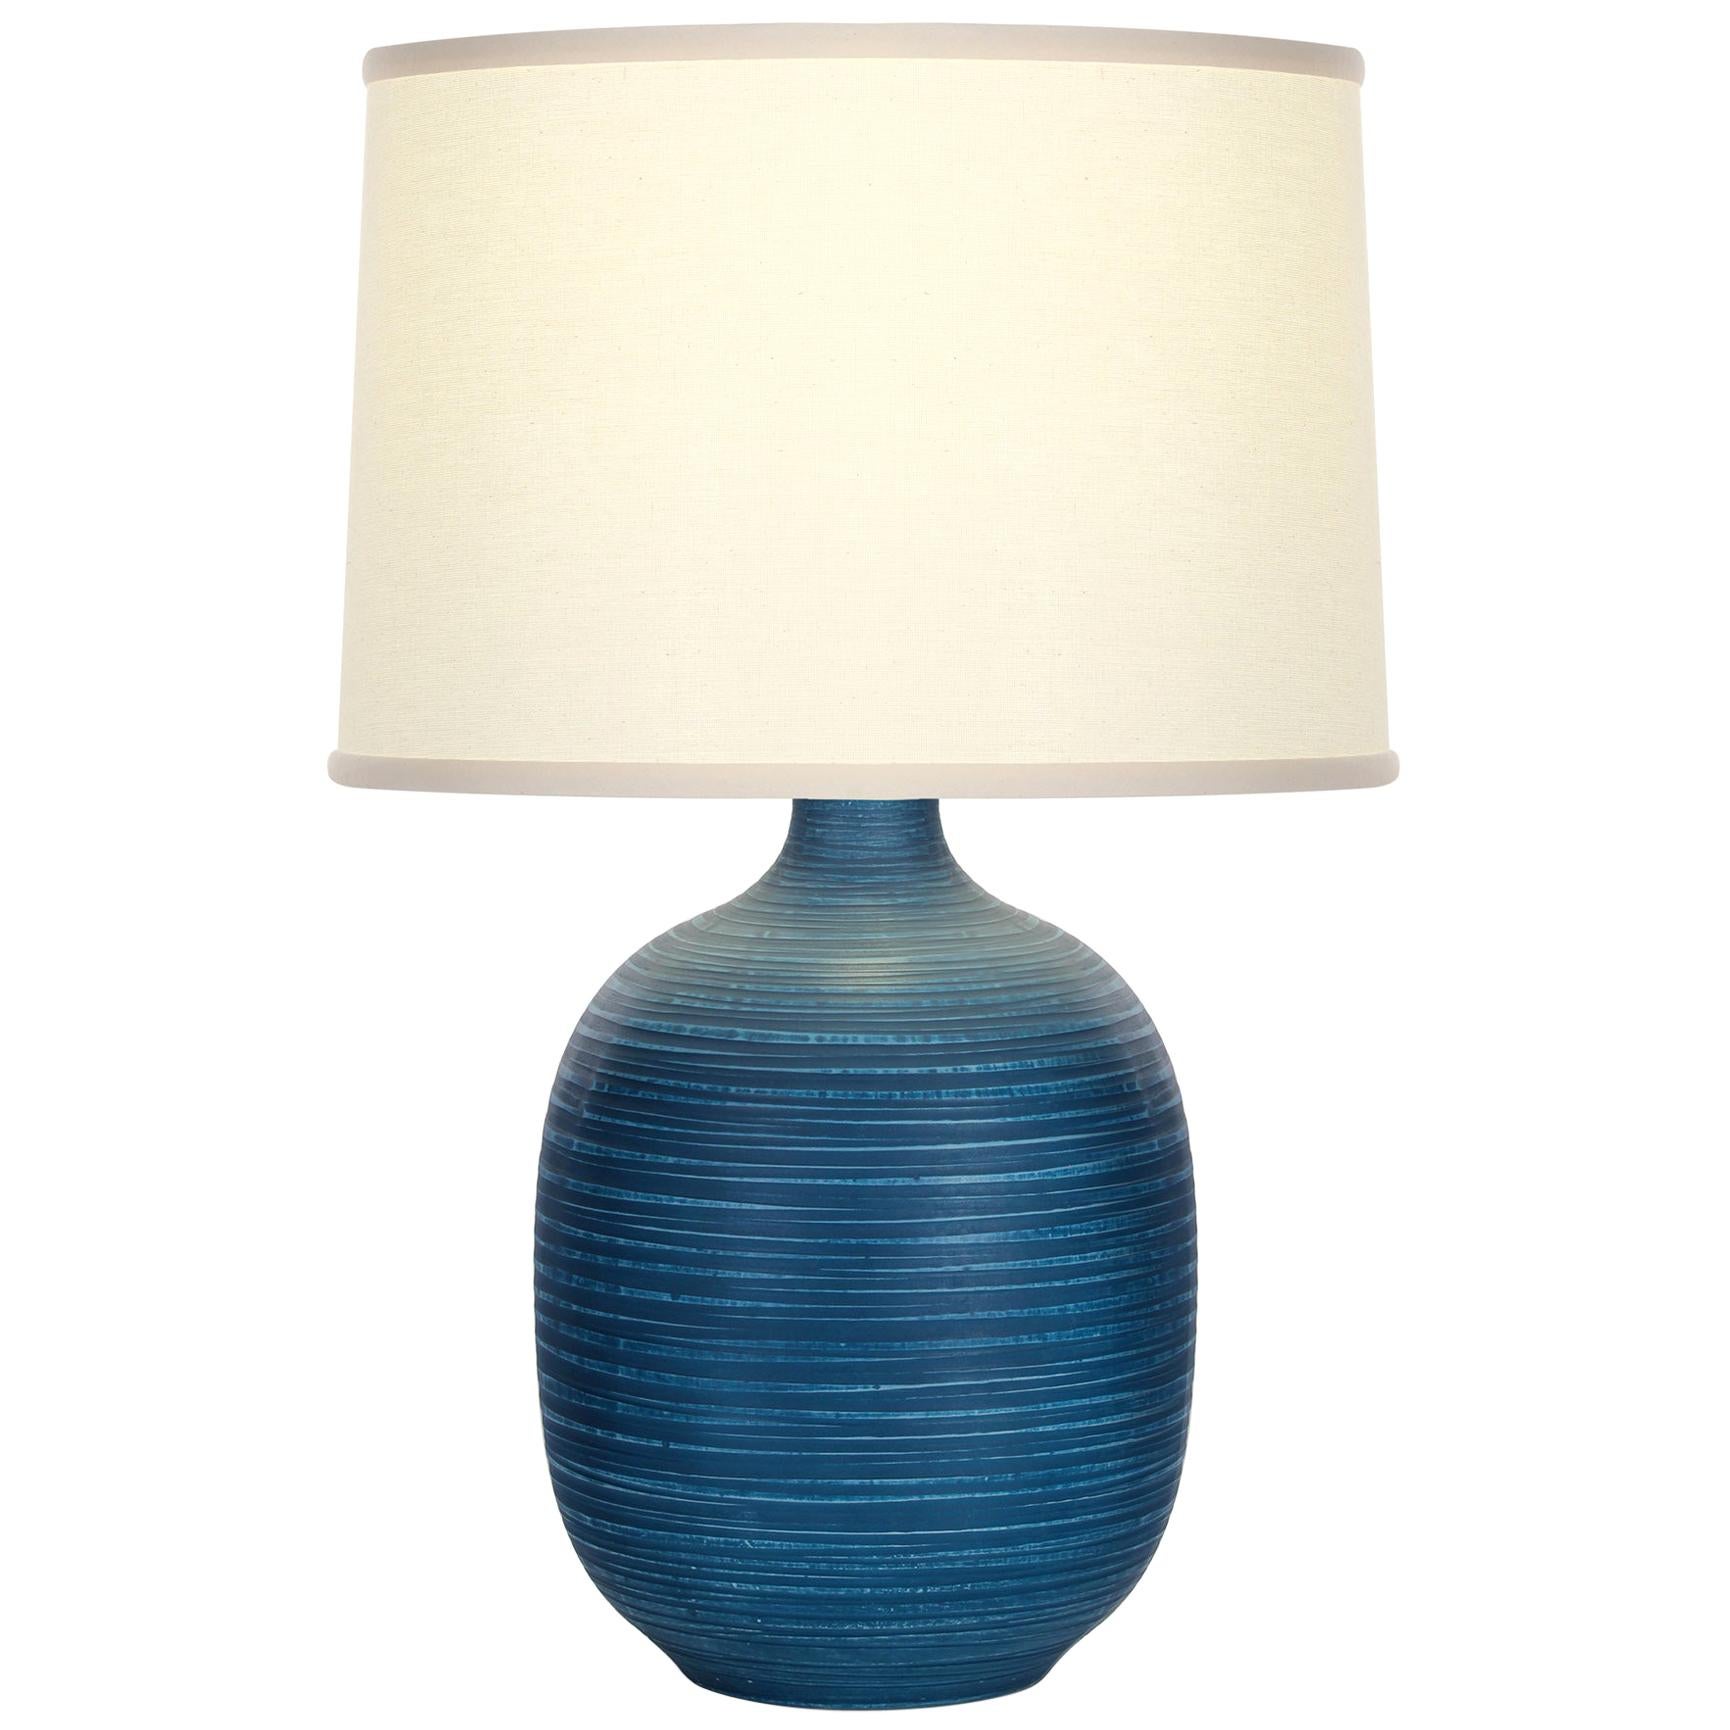 Sayles Table Lamp in Blue Ceramic by CuratedKravet